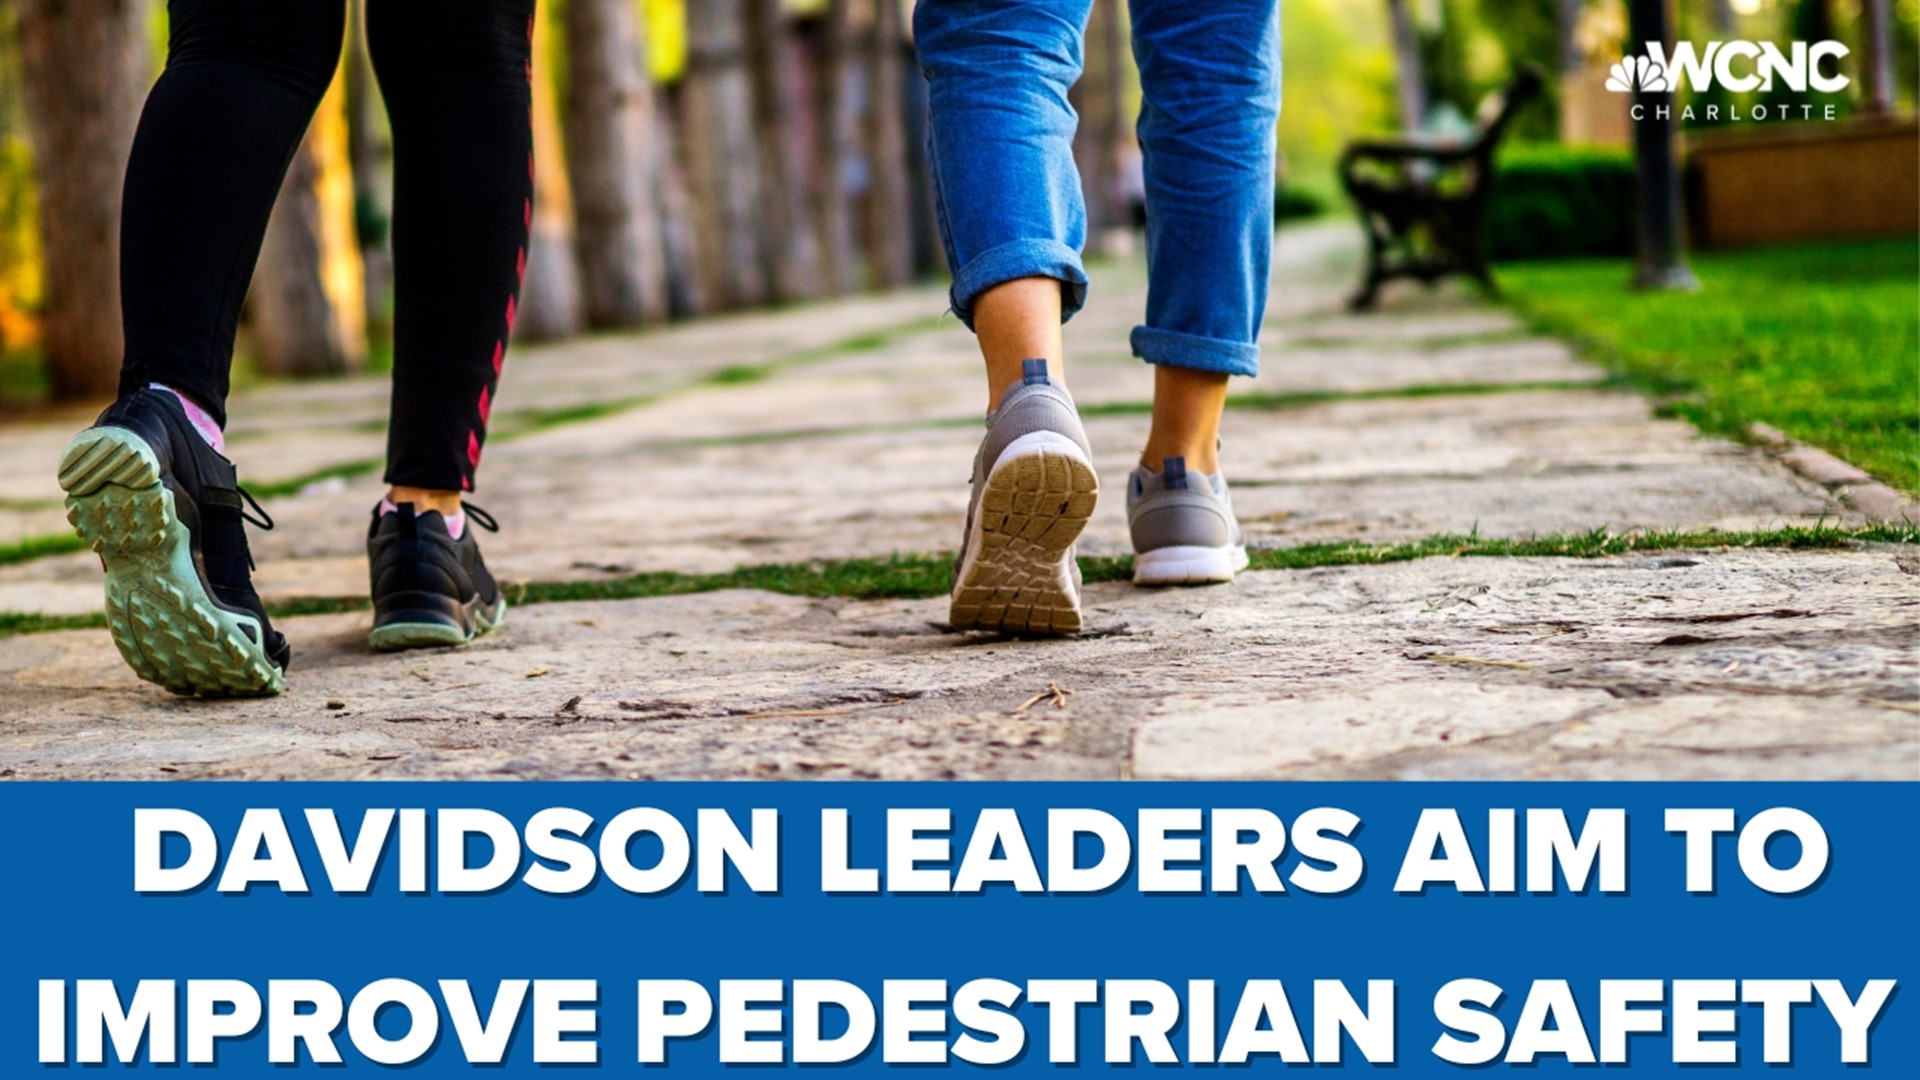 Davidson leaders aim to improve pedestrian safety